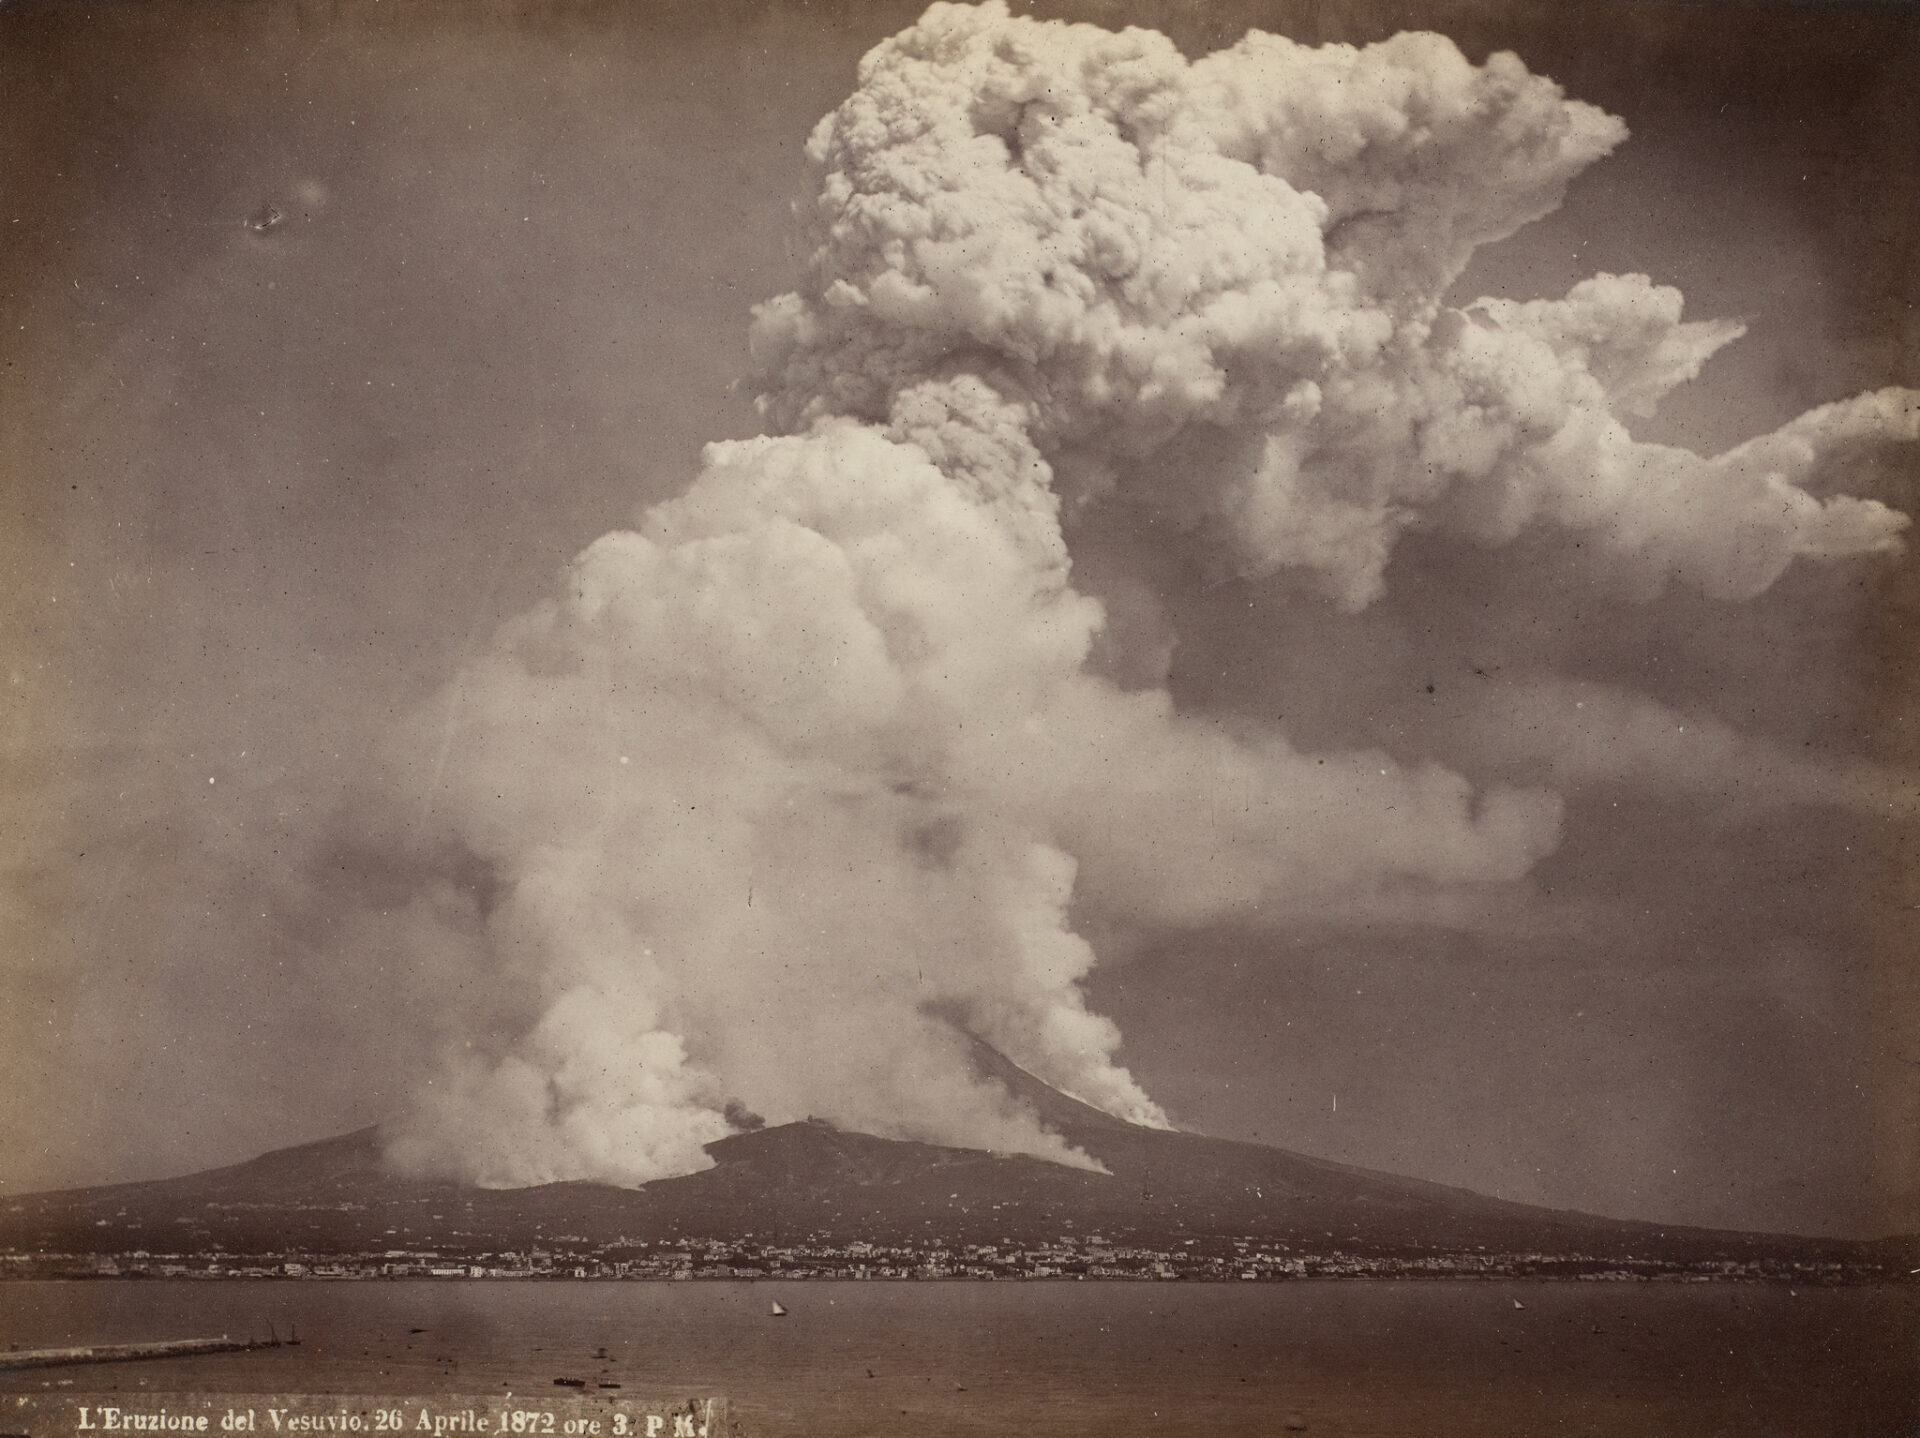 Giorgio Sommer, Neapel Der Ausbruch des Vesuvs am 26. April 1872, 15 Uhr , 1872, Städel Museum, Frankfurt am Main, Public Domain